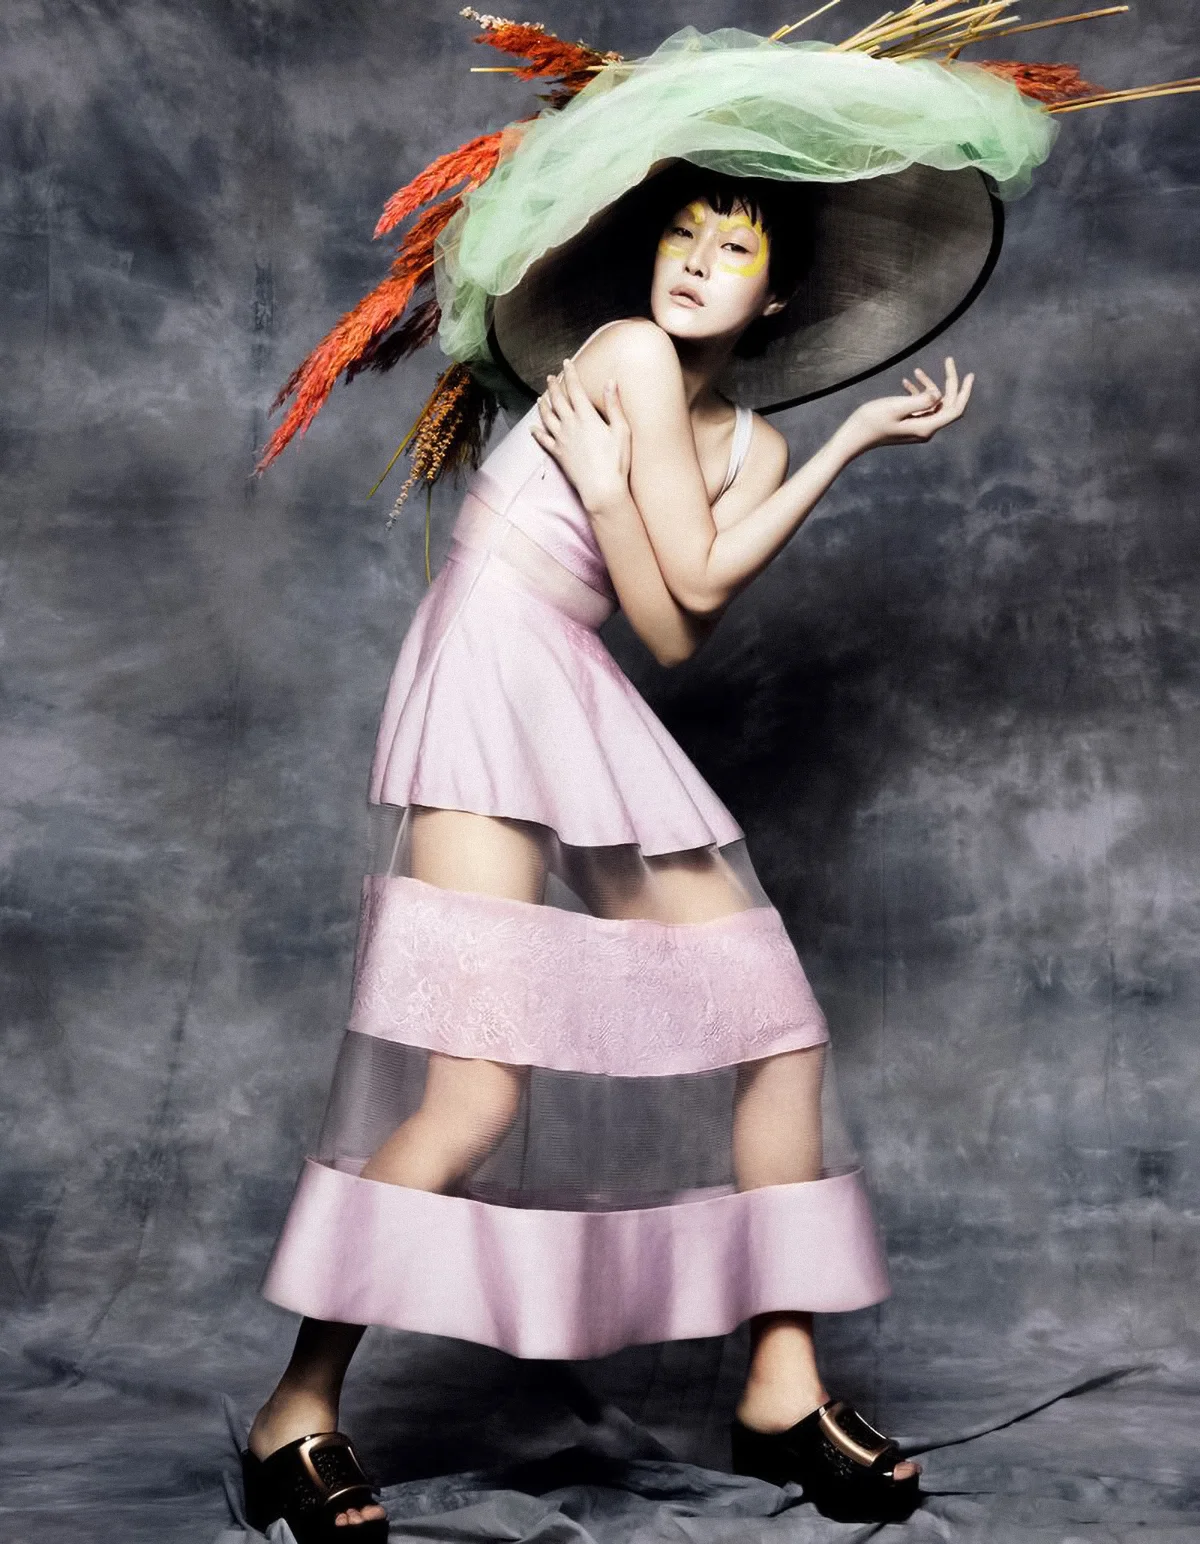 Ajak Deng and Sohyun Jung cover Vogue Portugal April 2022 by Domen & Van de Velde